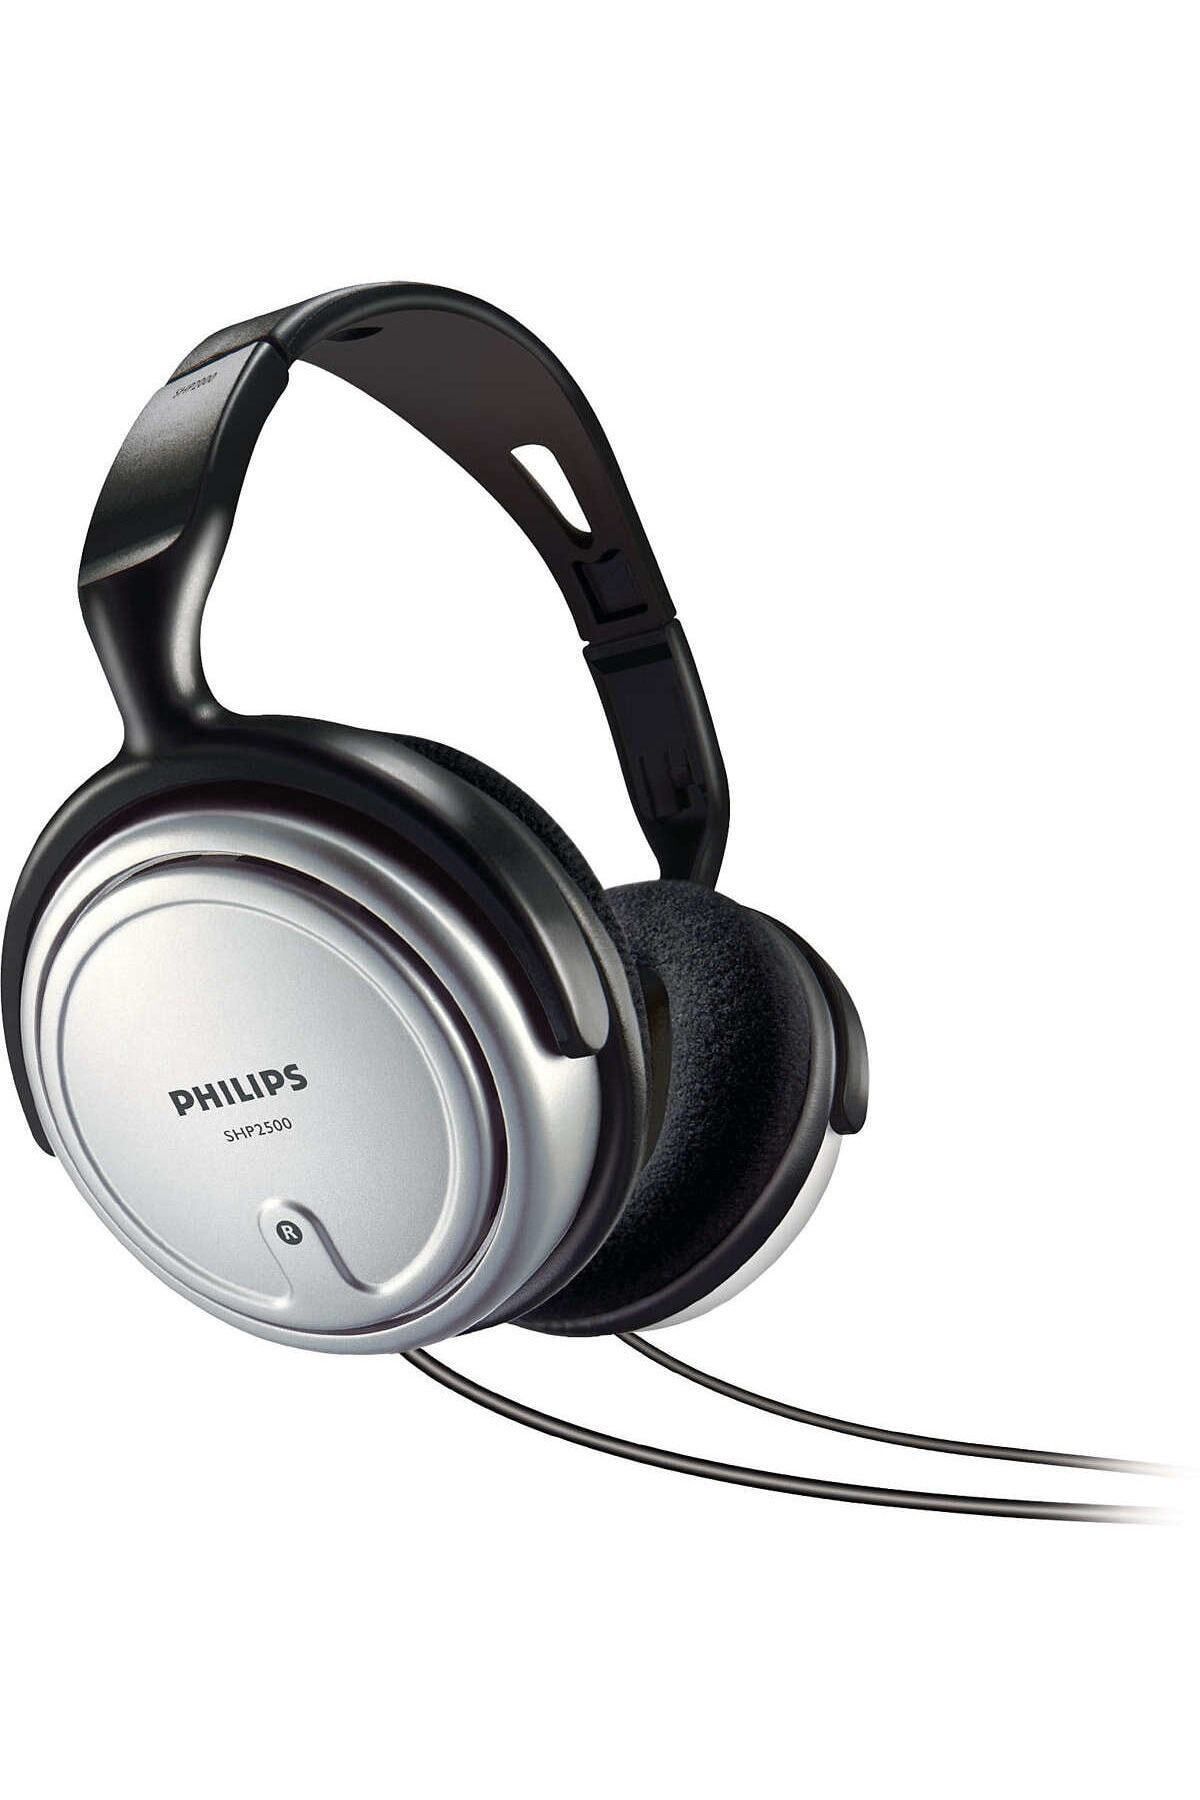 Philips SHP2500/10 Kulaküstü Kulaklık Siyah/Gümüş